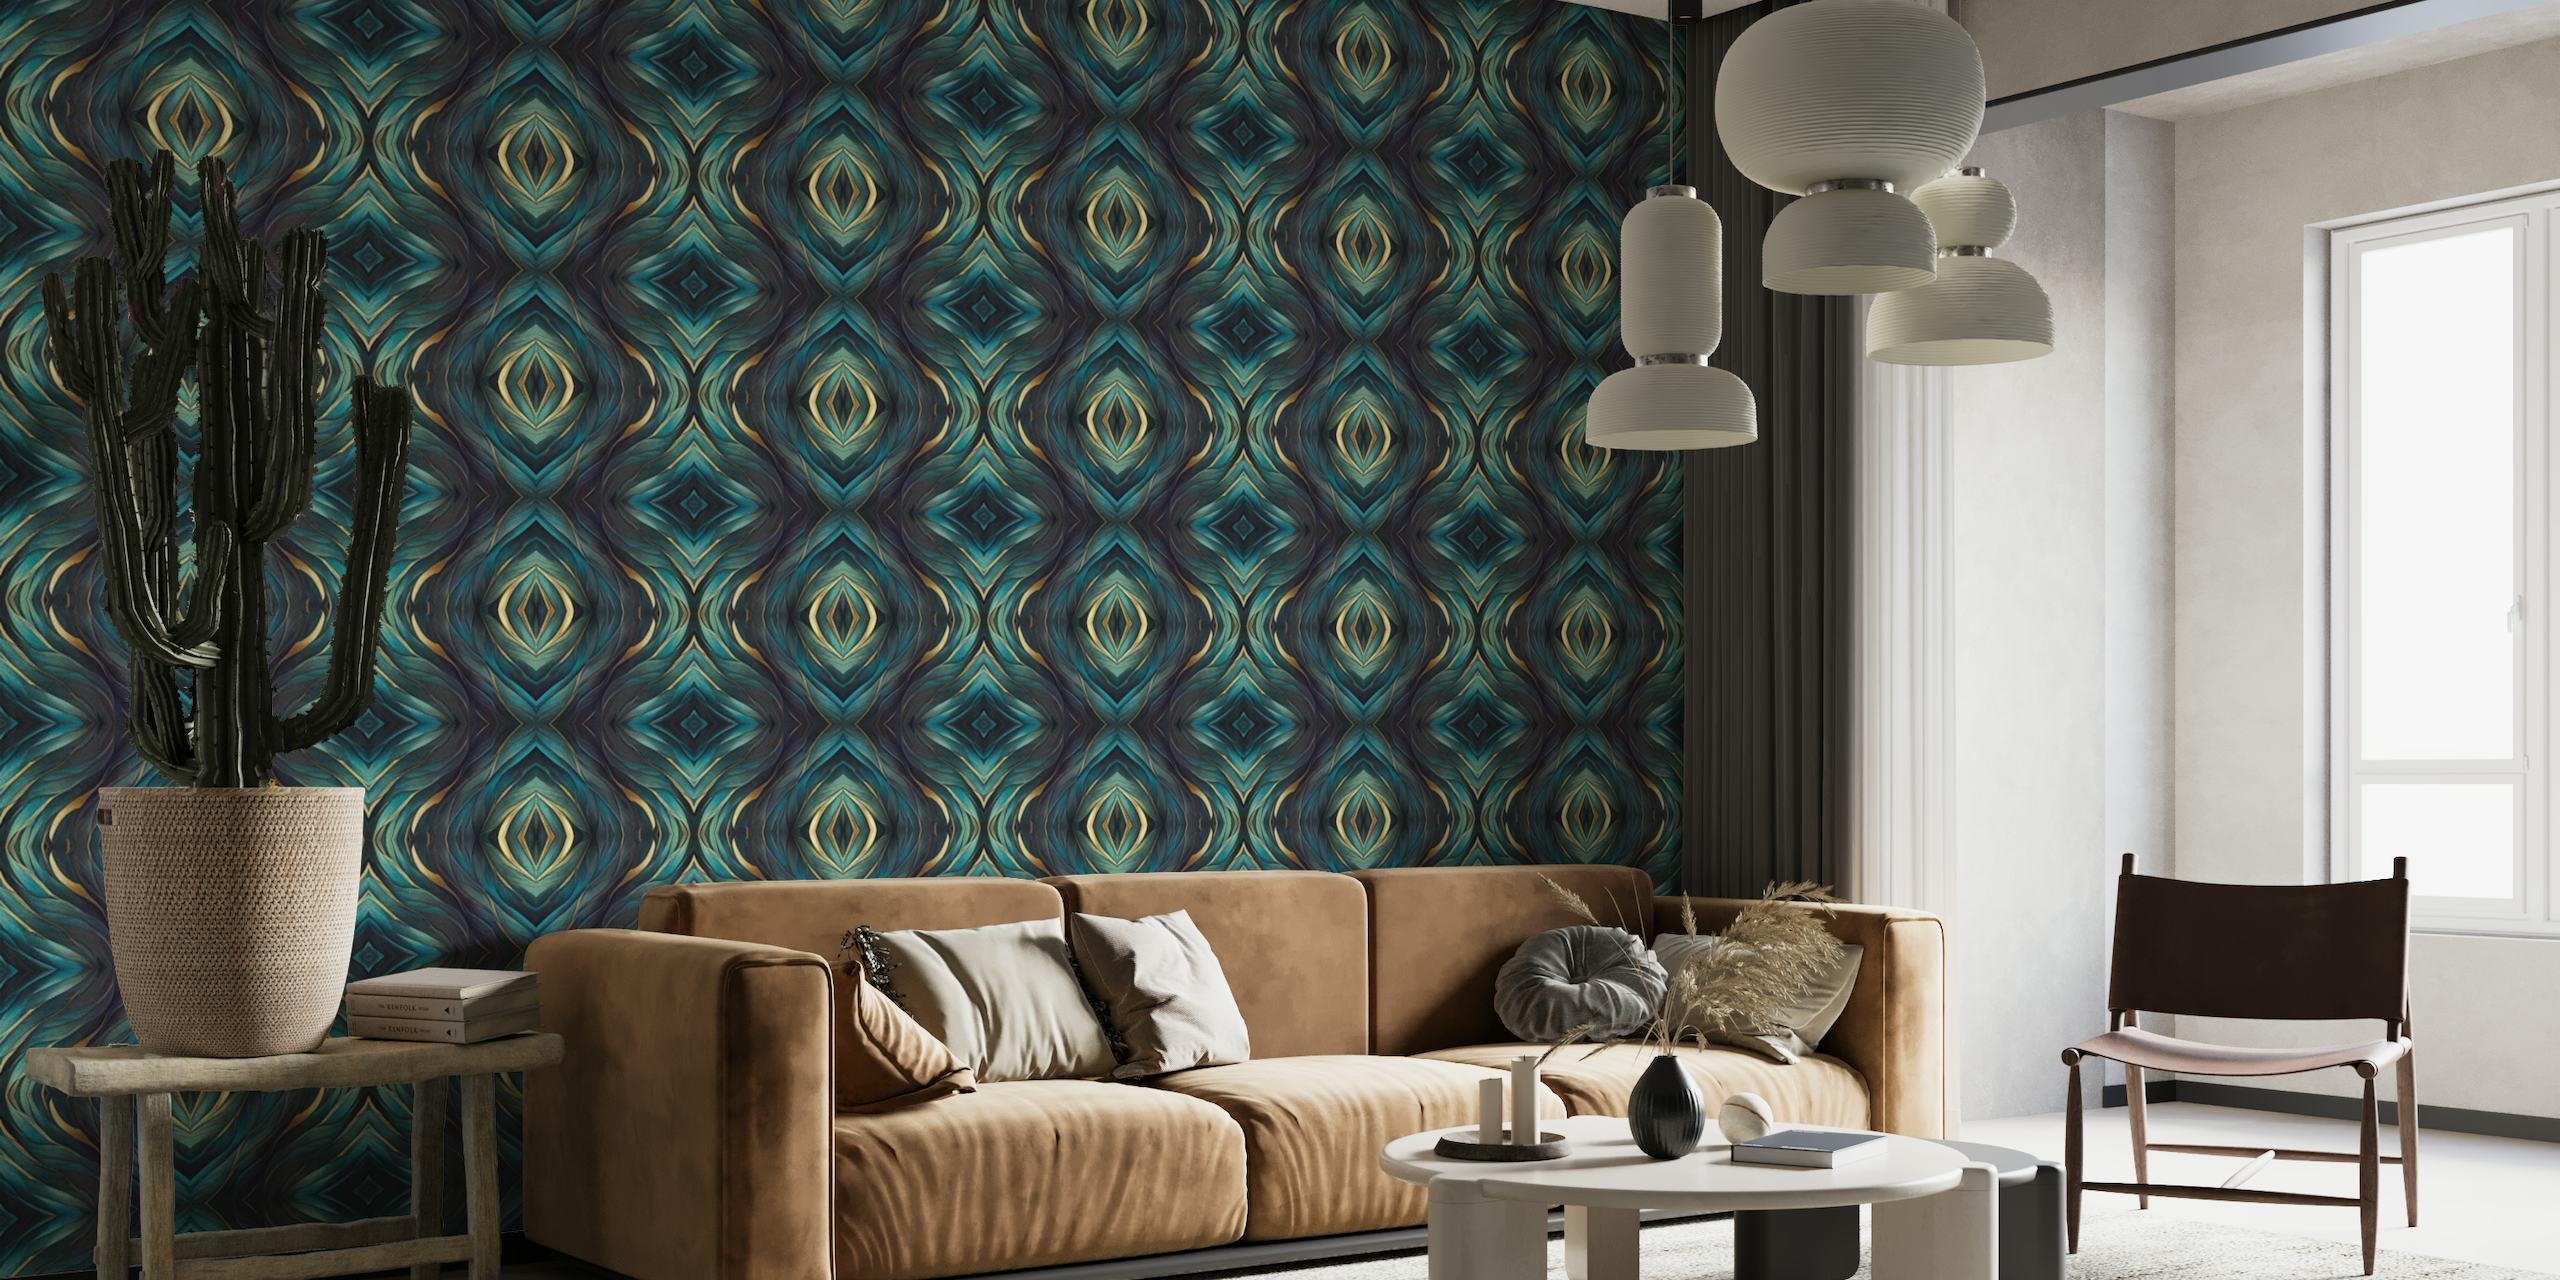 Artisanal Mediterranean Tile Design Teal Blue Gold papiers peint